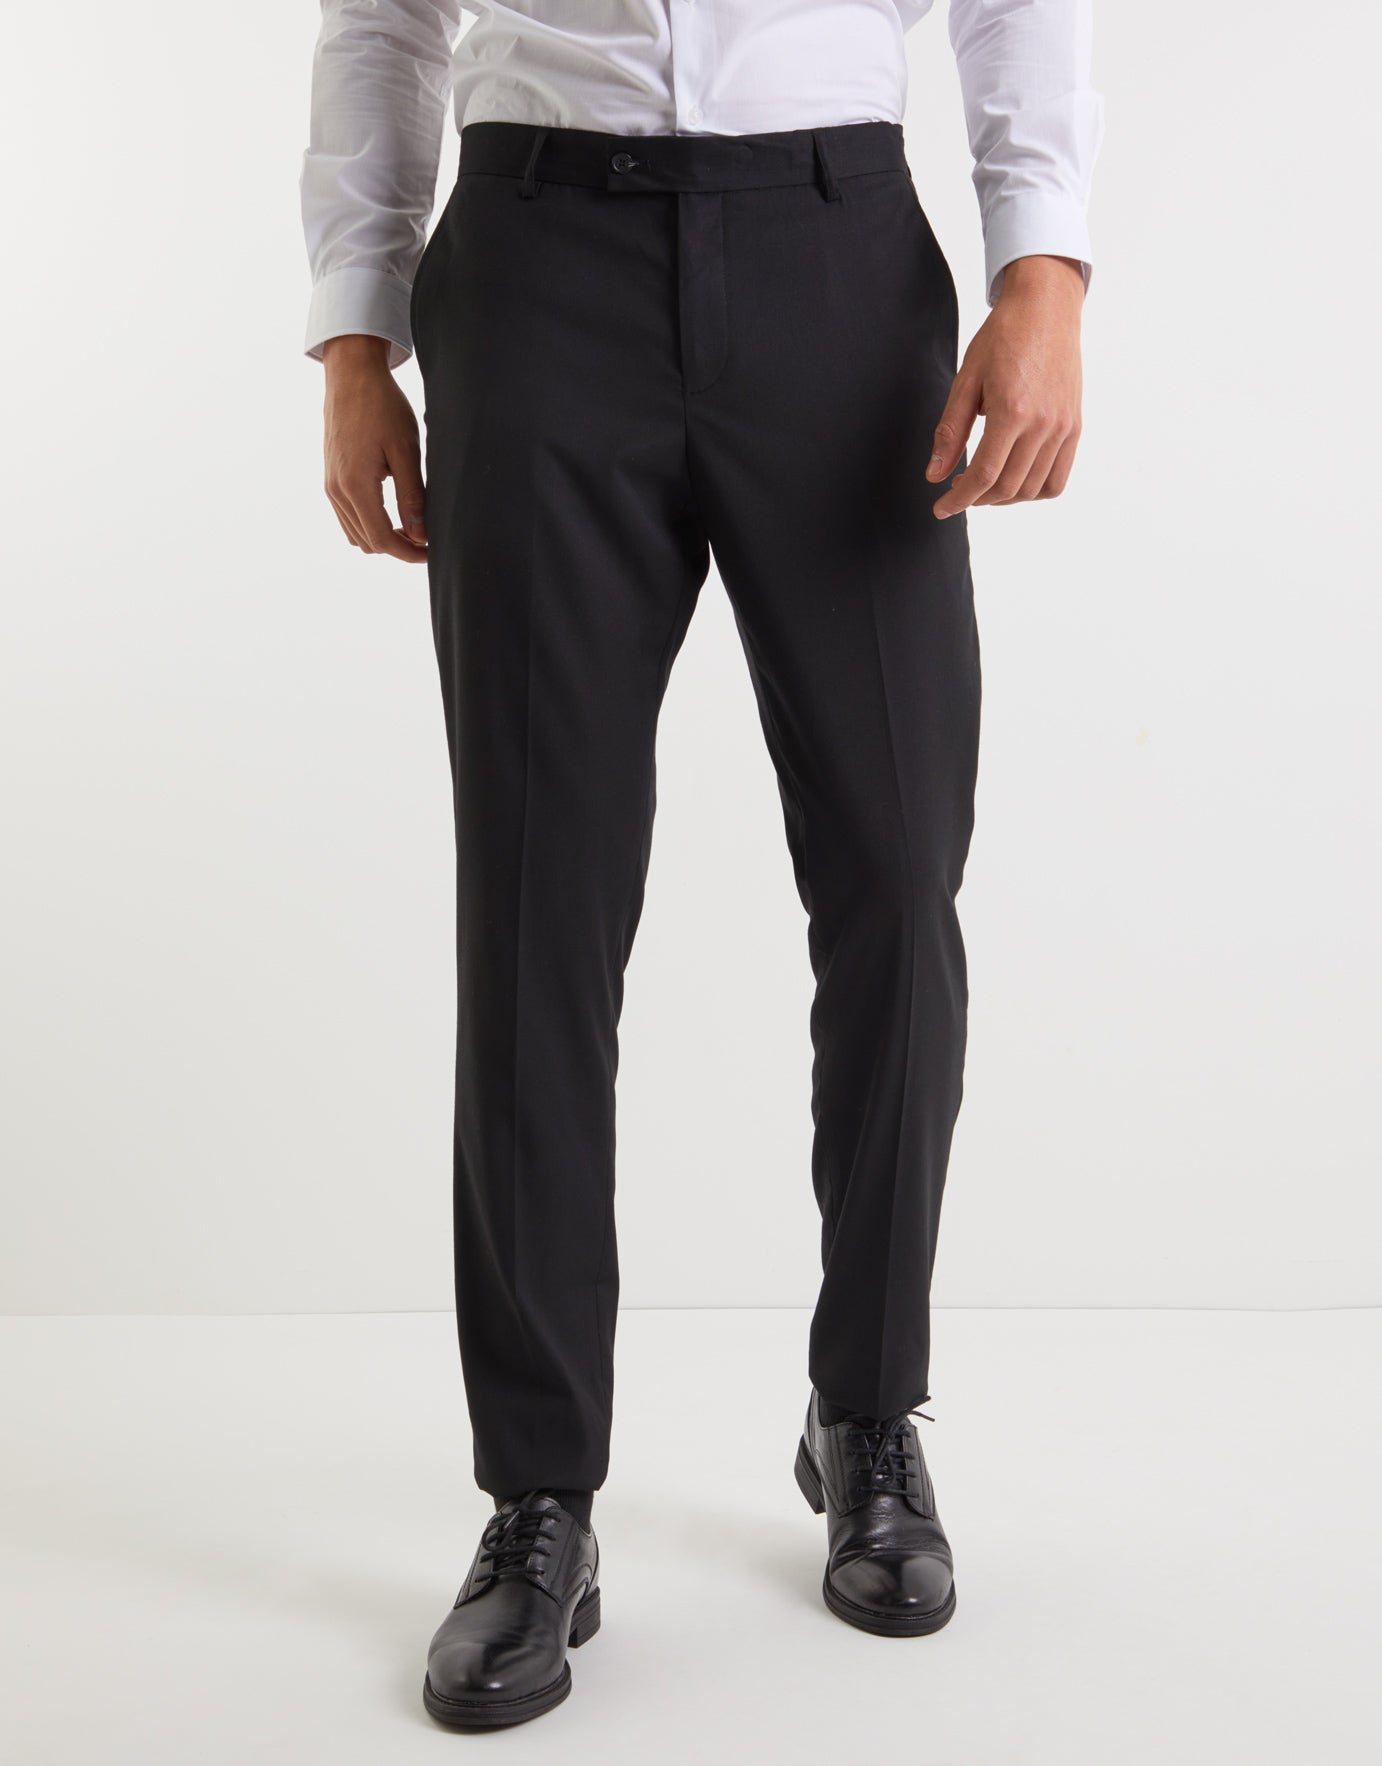 SN Men's Dress Pant Trouser Formal Grey – The Cut Price